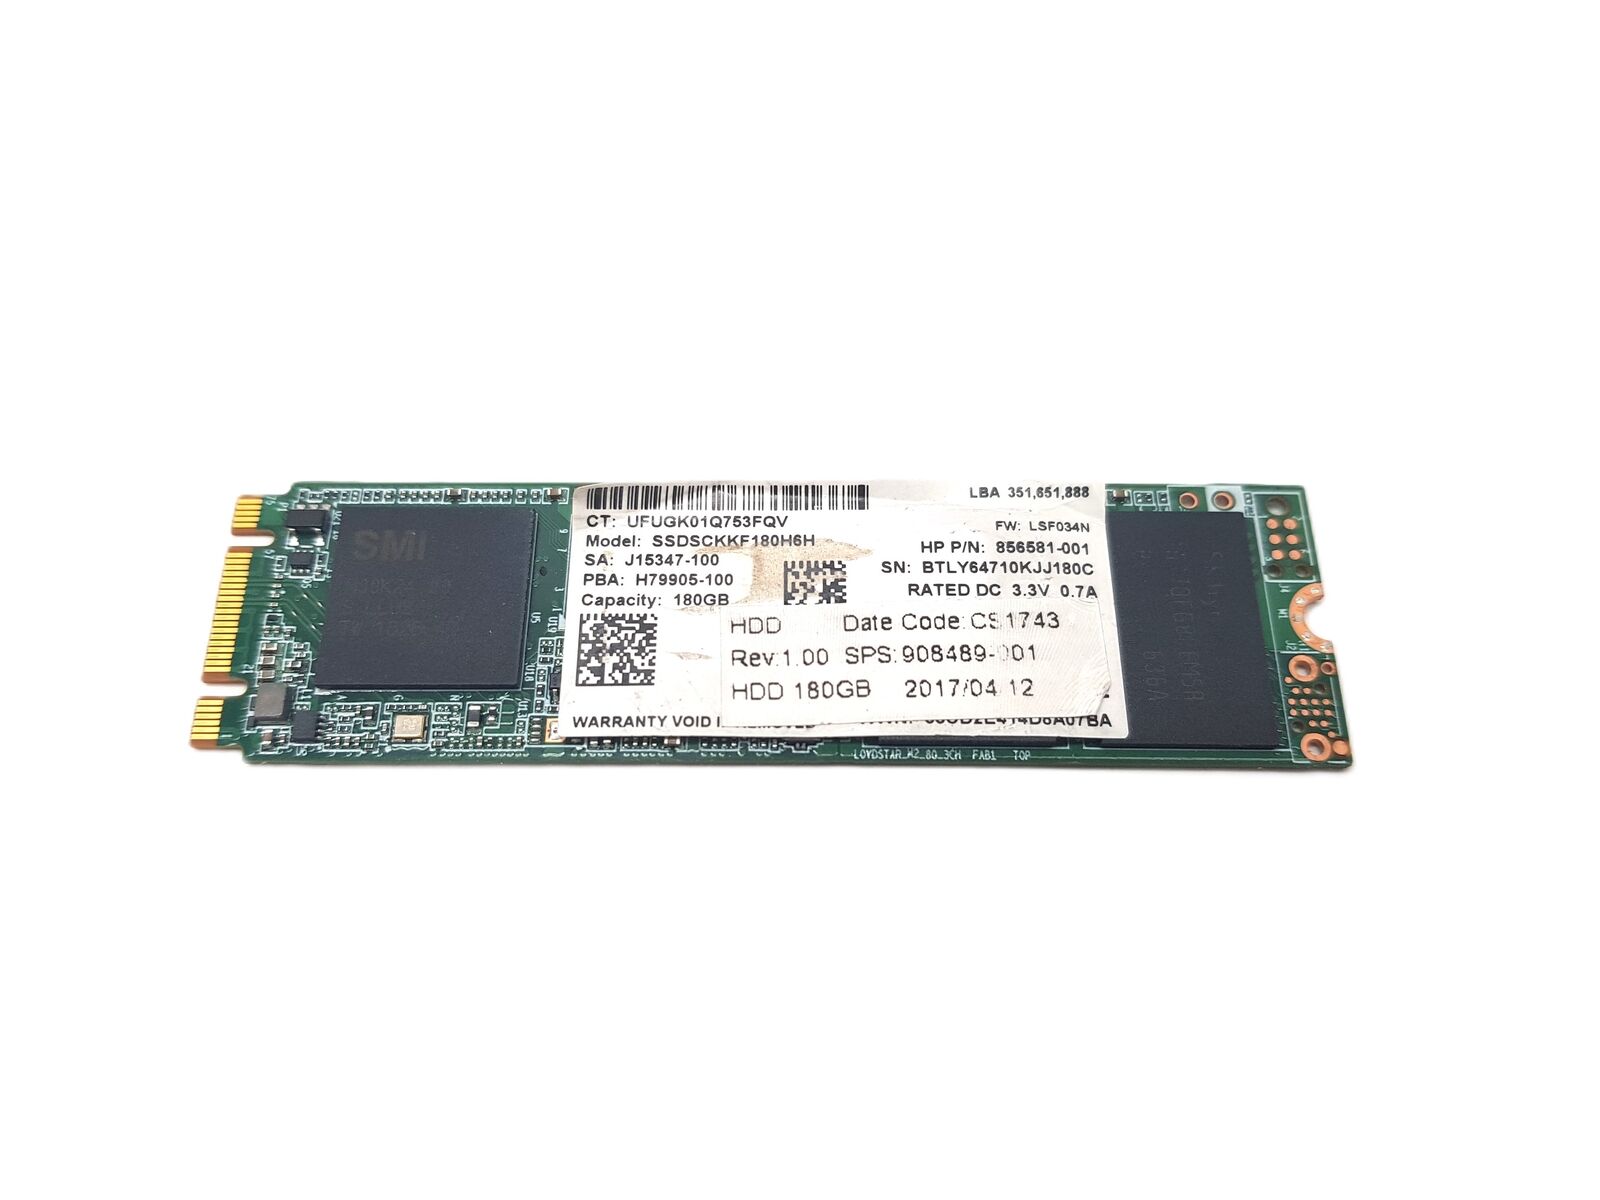 Intel SSDSCKKF180H6H Pro 5400s 180GB M.2 Solid State Drive